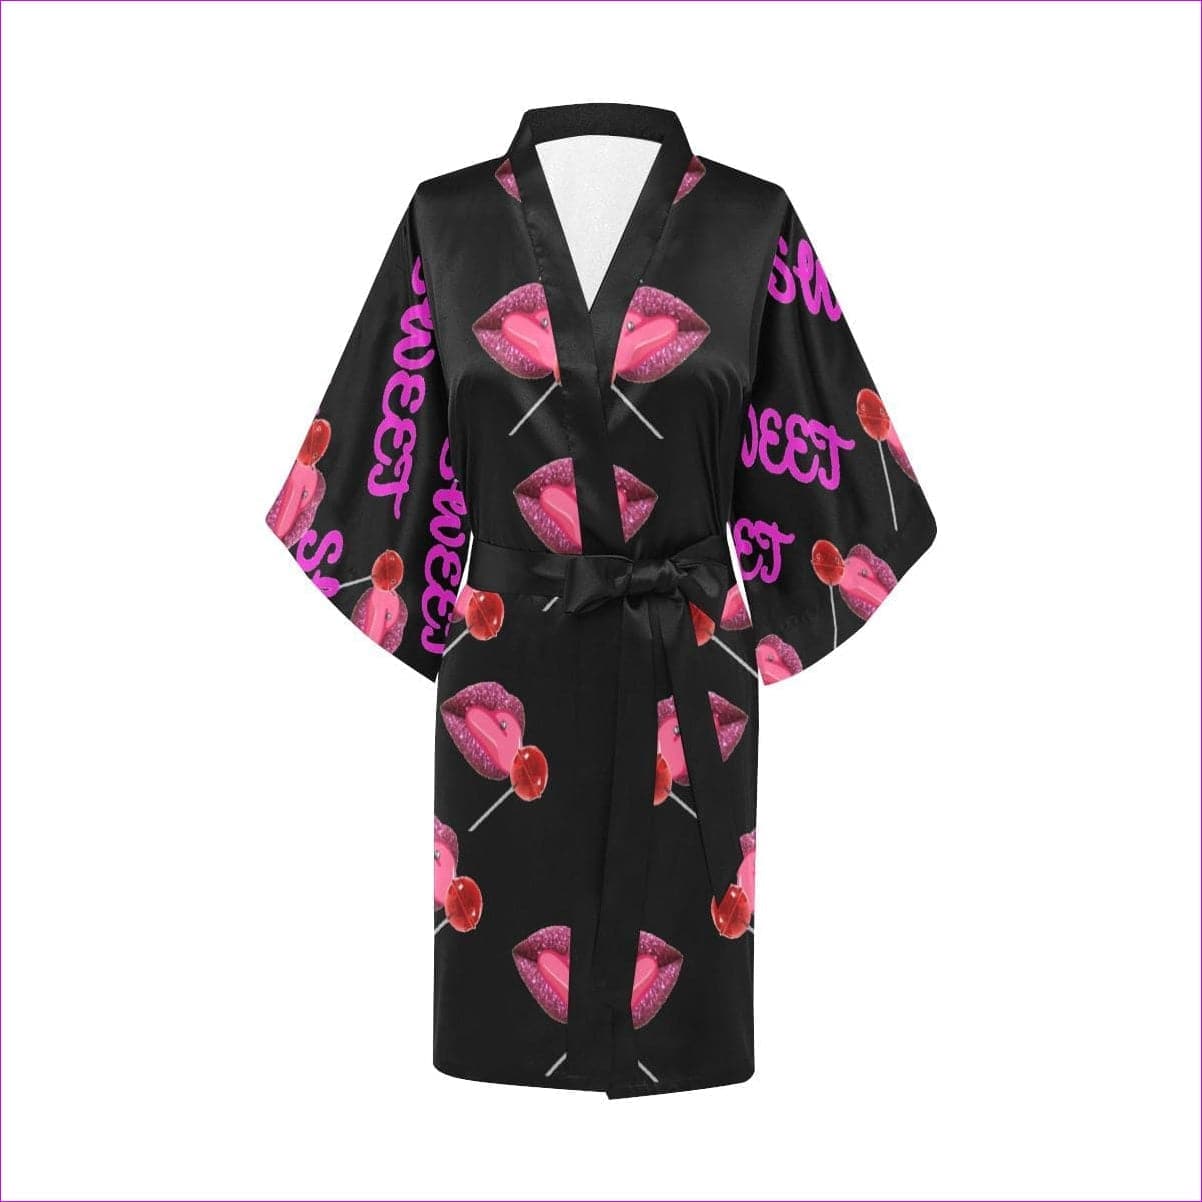 Sweet Clothing Kimono Robe - Black Women's Short Kimono Robe - Sweet Clothing Collection Short Kimono Robe - womens kimono robe at TFC&H Co.